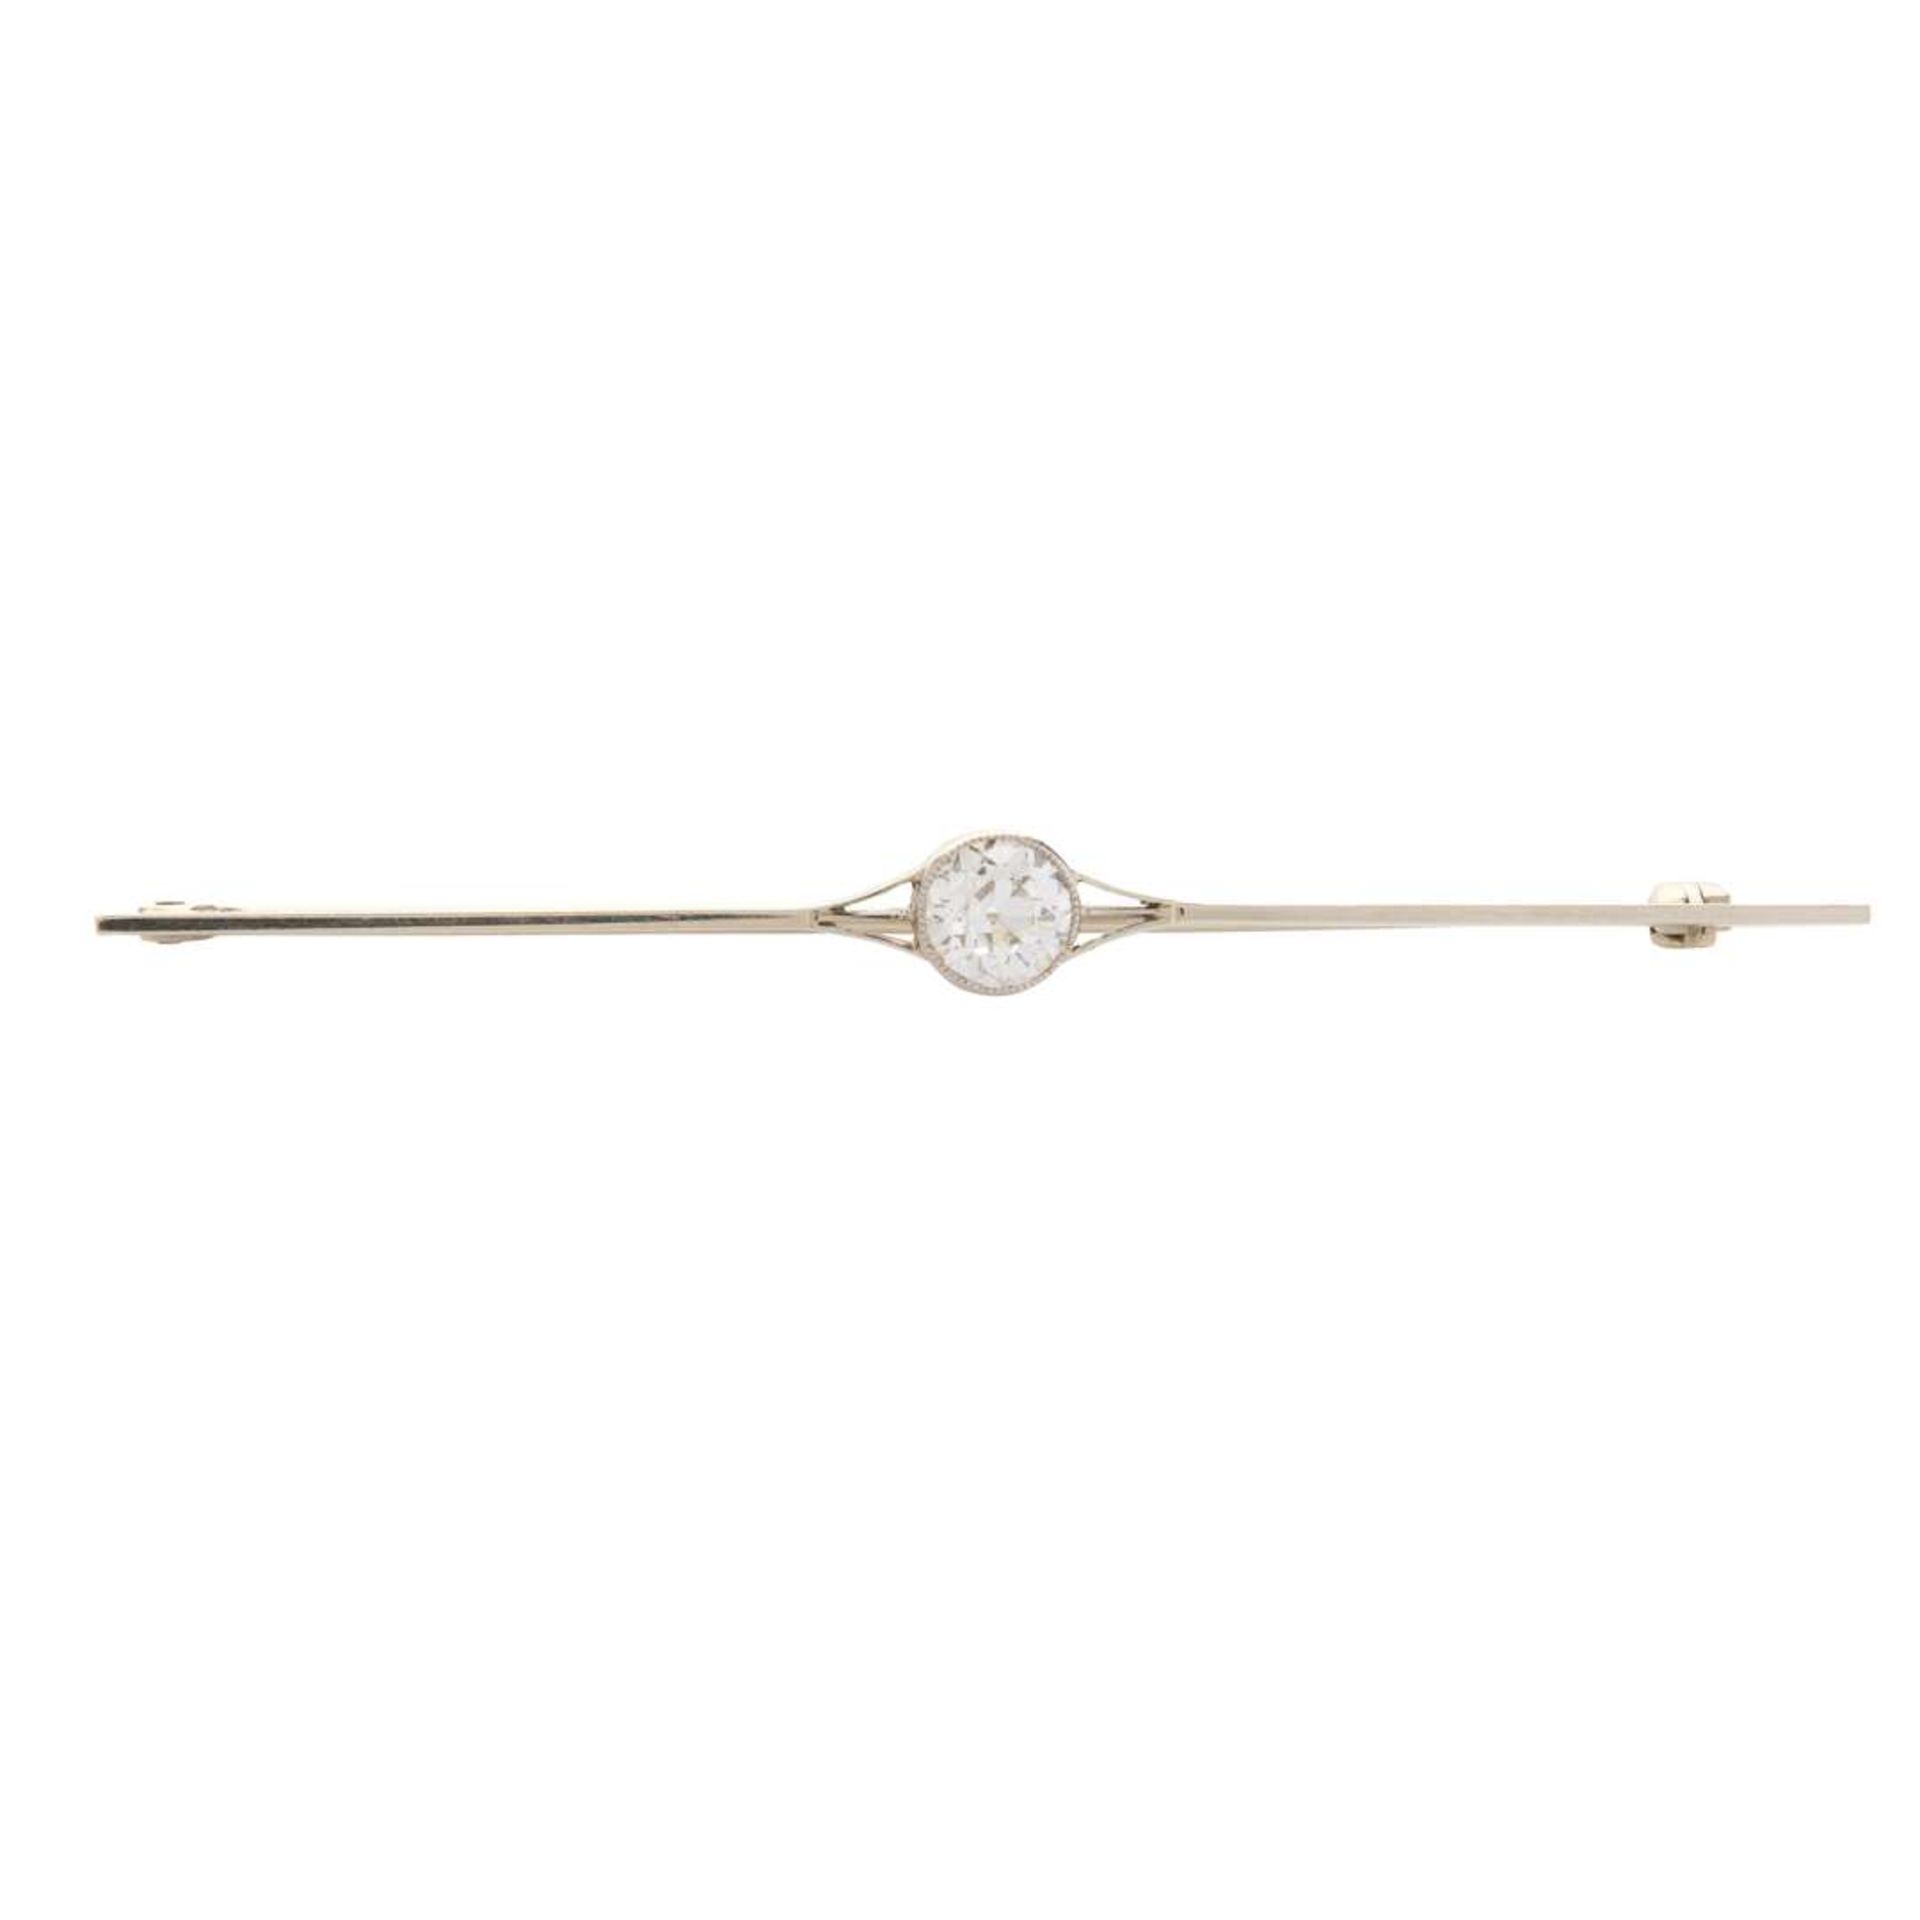 A diamond single-stone bar brooch